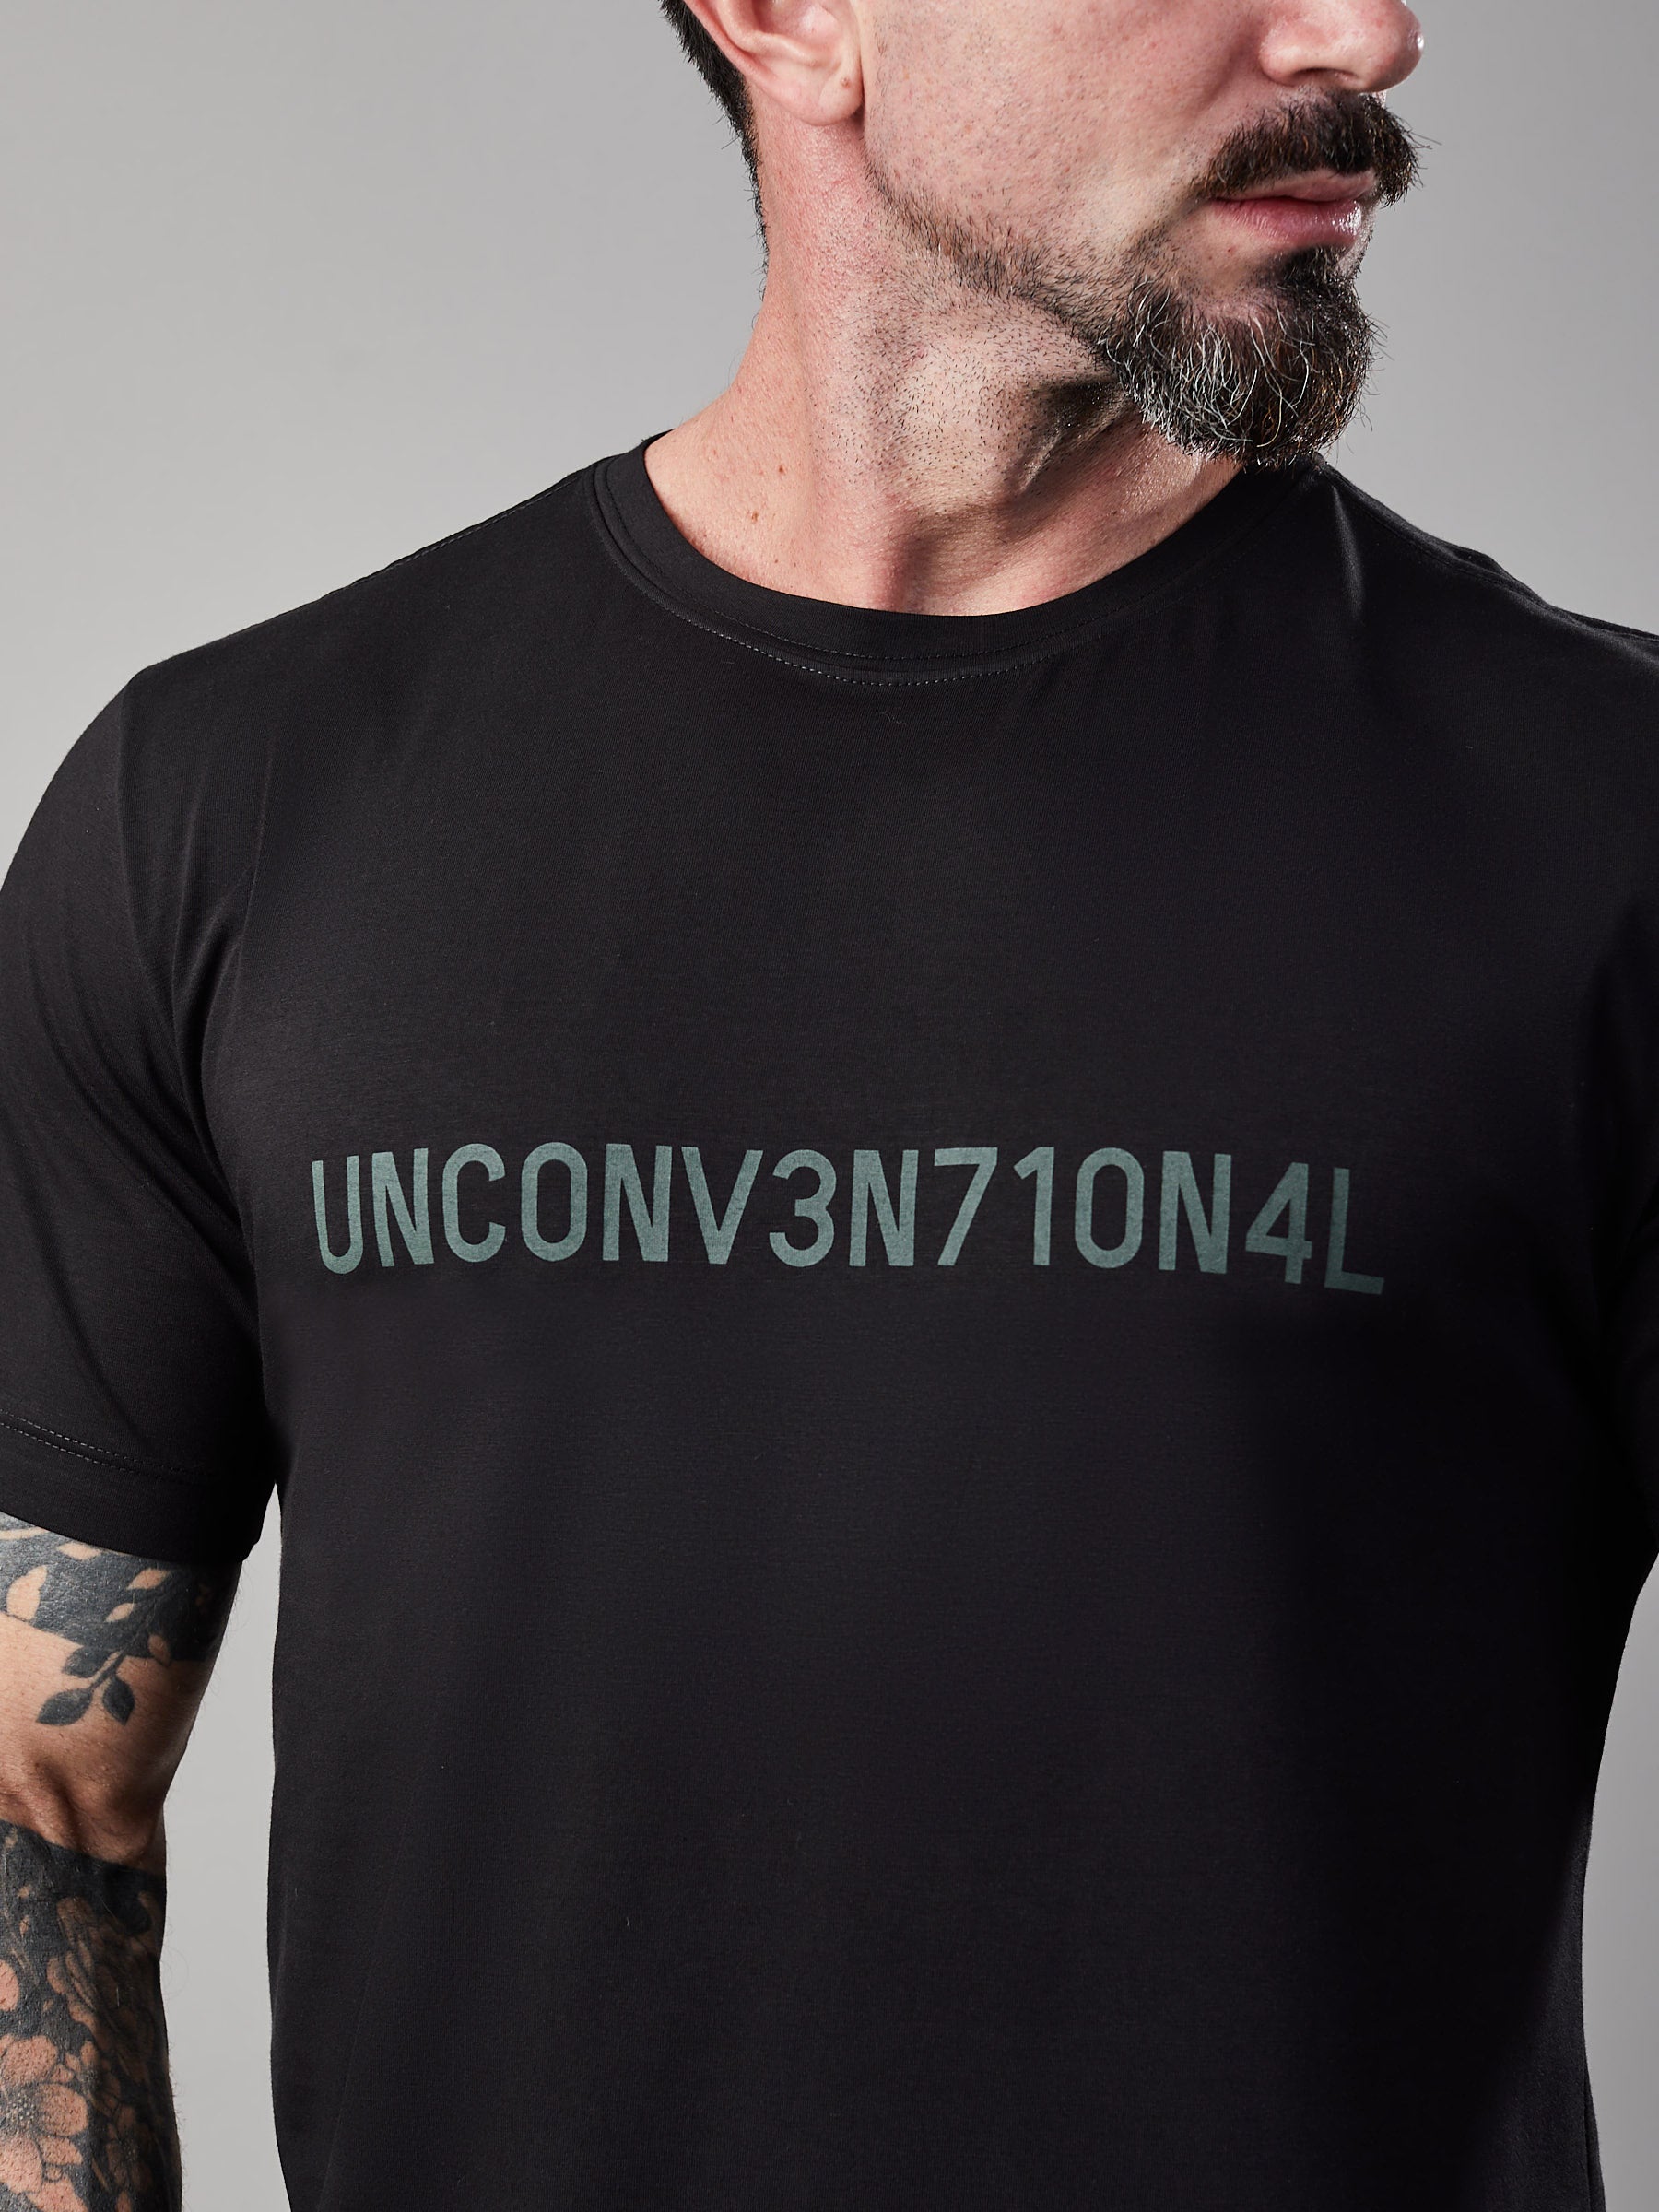 Camisetas masculinas Marcado cf-tamanho-m Página 2 - Unconventional